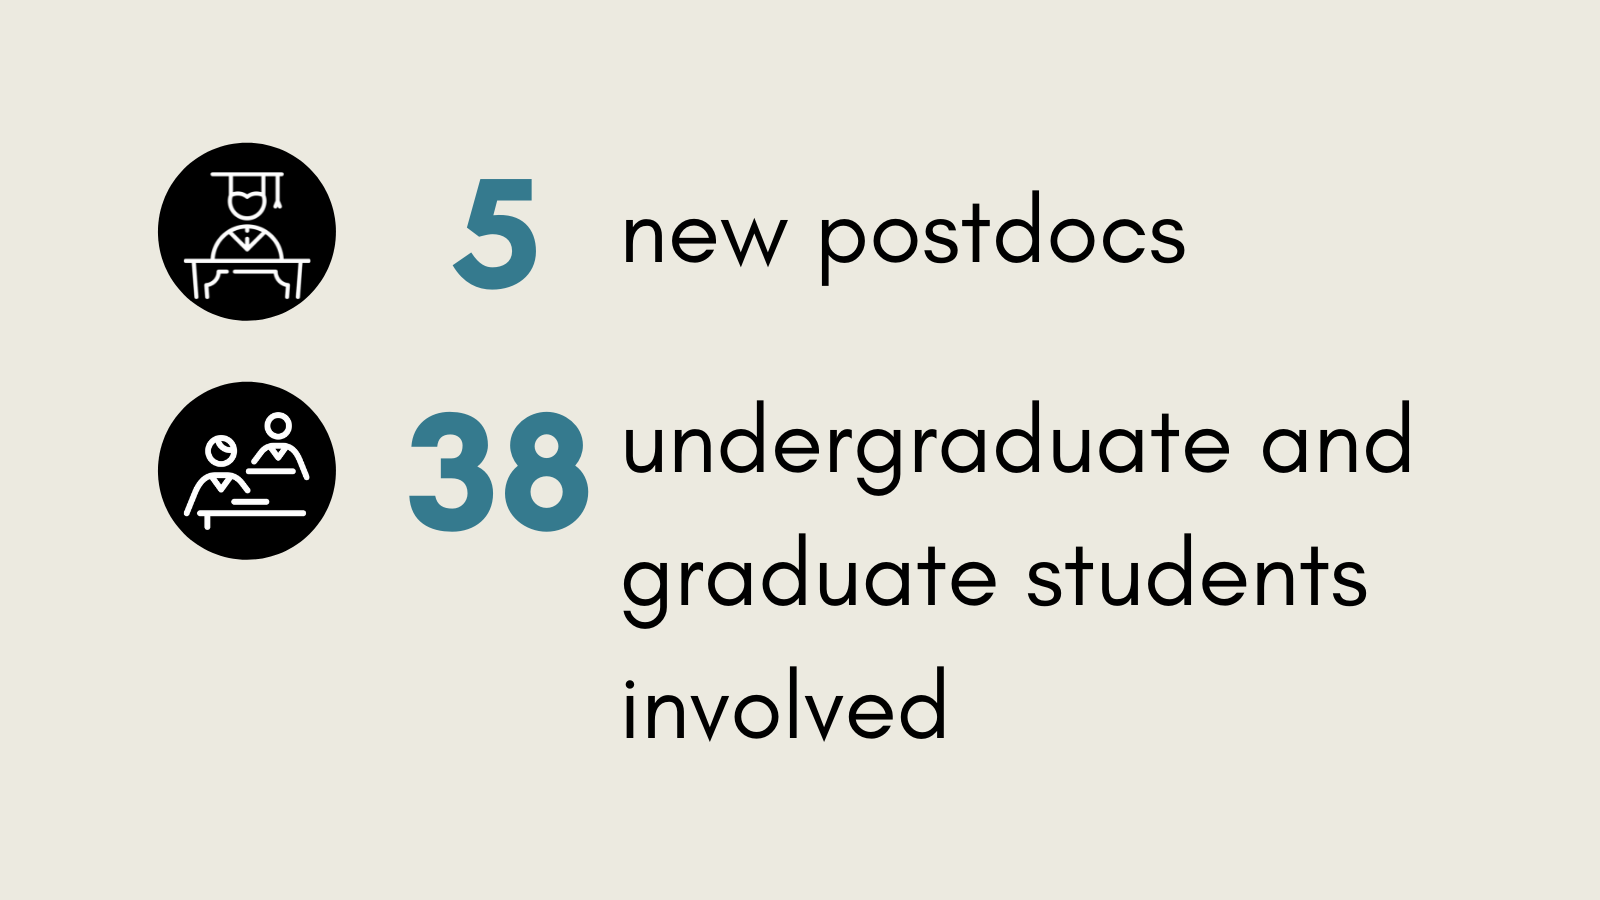 infographic with statistics: 5 new postdocs, 38 undergraduate and graduate students involved